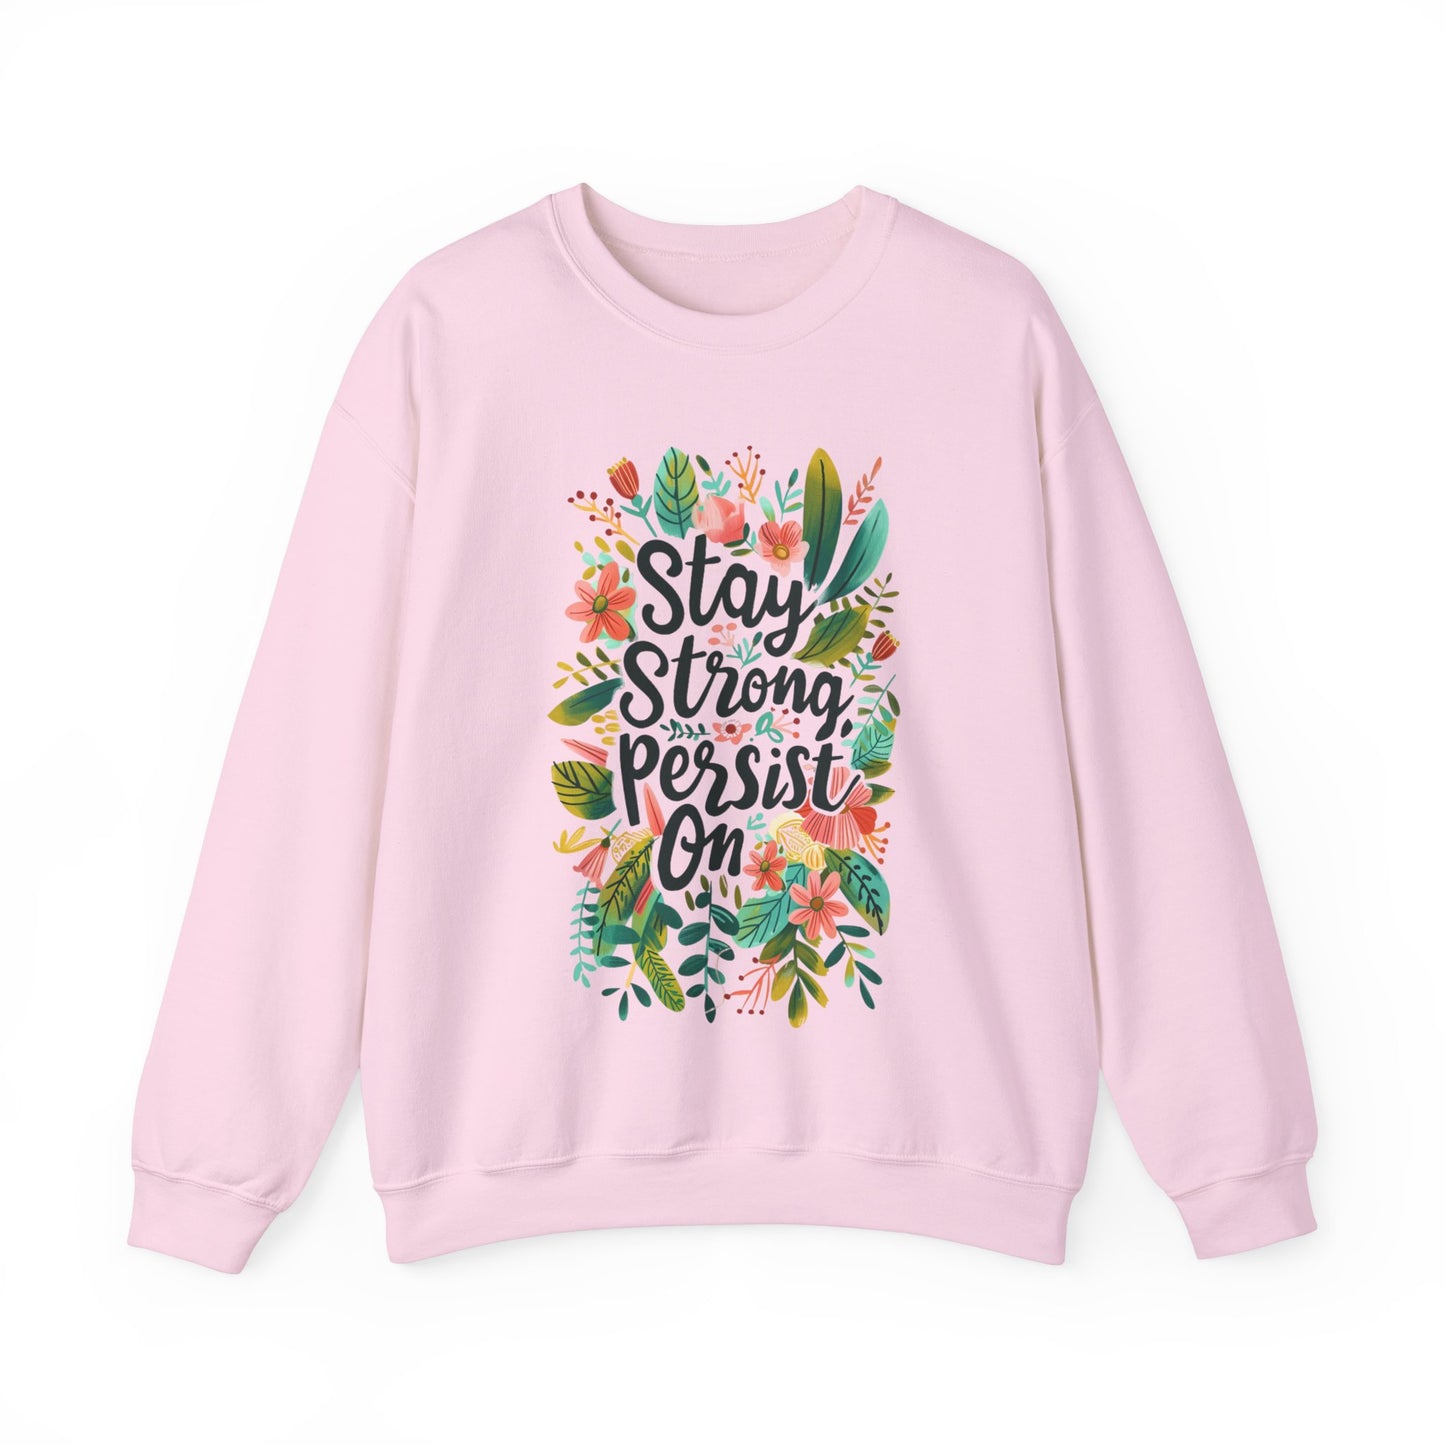 Stay Strong Persist On Women's Crewneck Gildan Sweatshirt